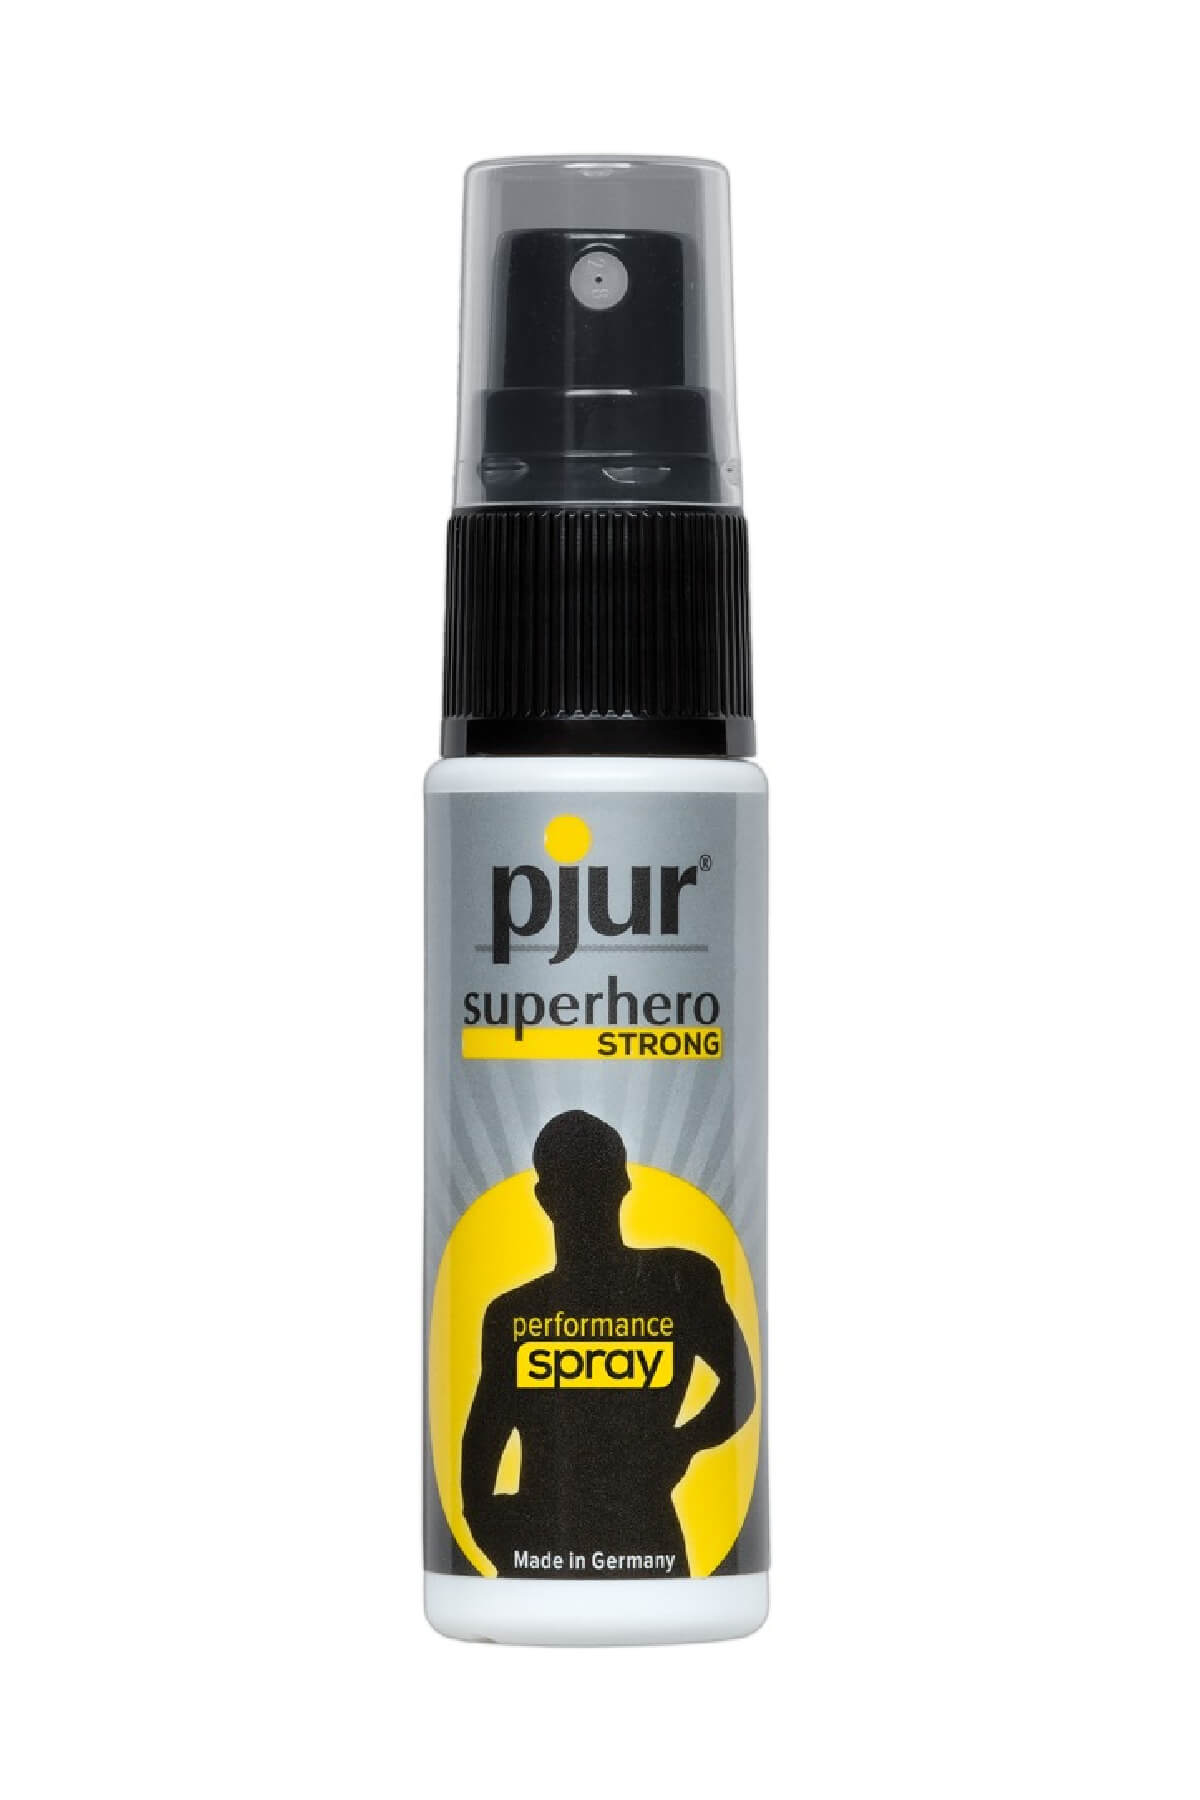 pjur Superhero Strong performance Spray 20ml